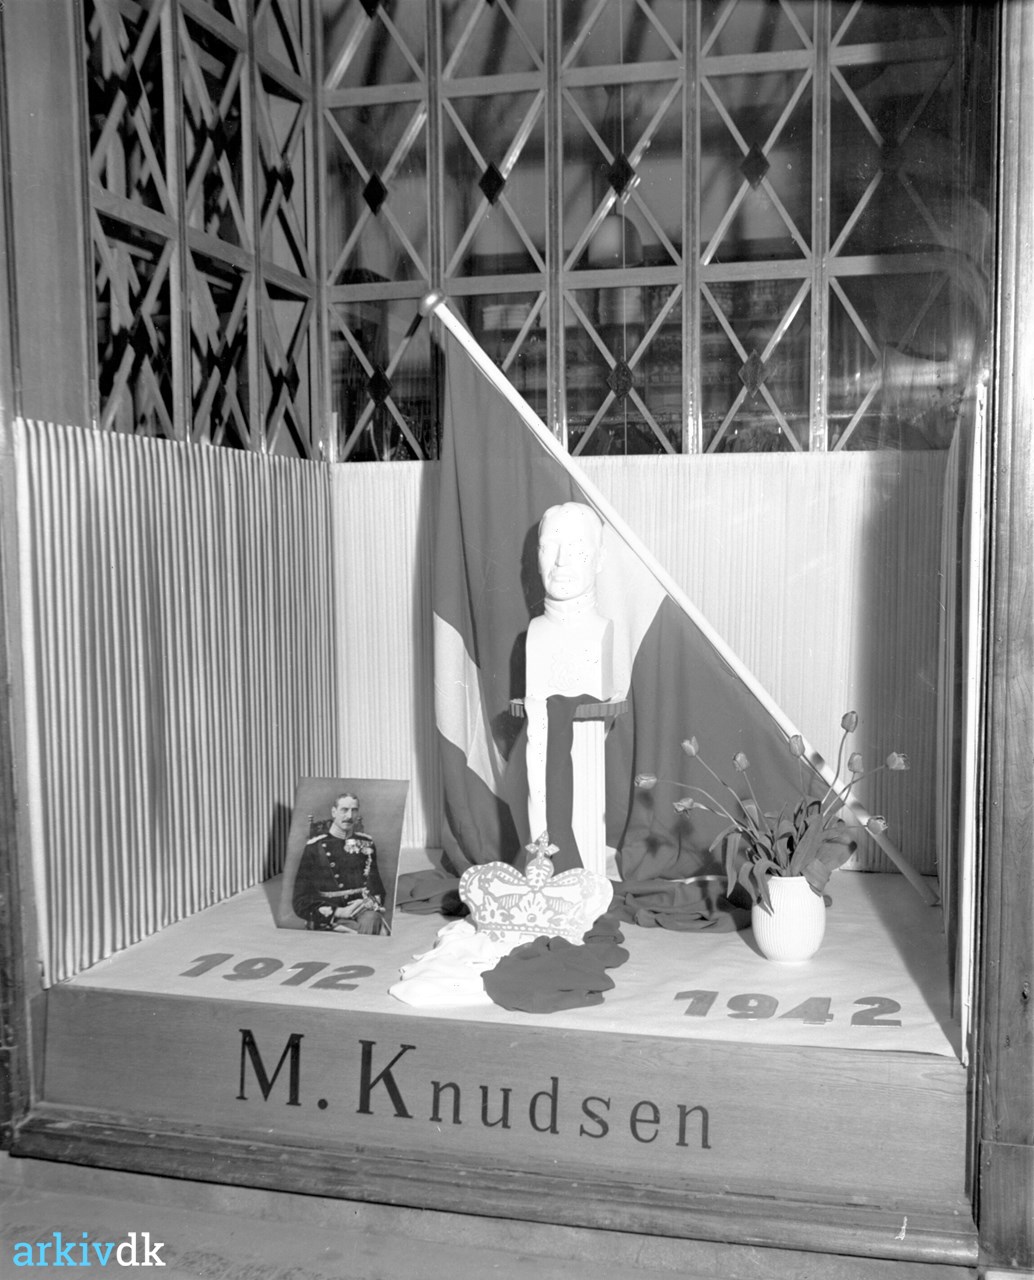 M. Knudsen, Nørregade 5, Vejle, 1942